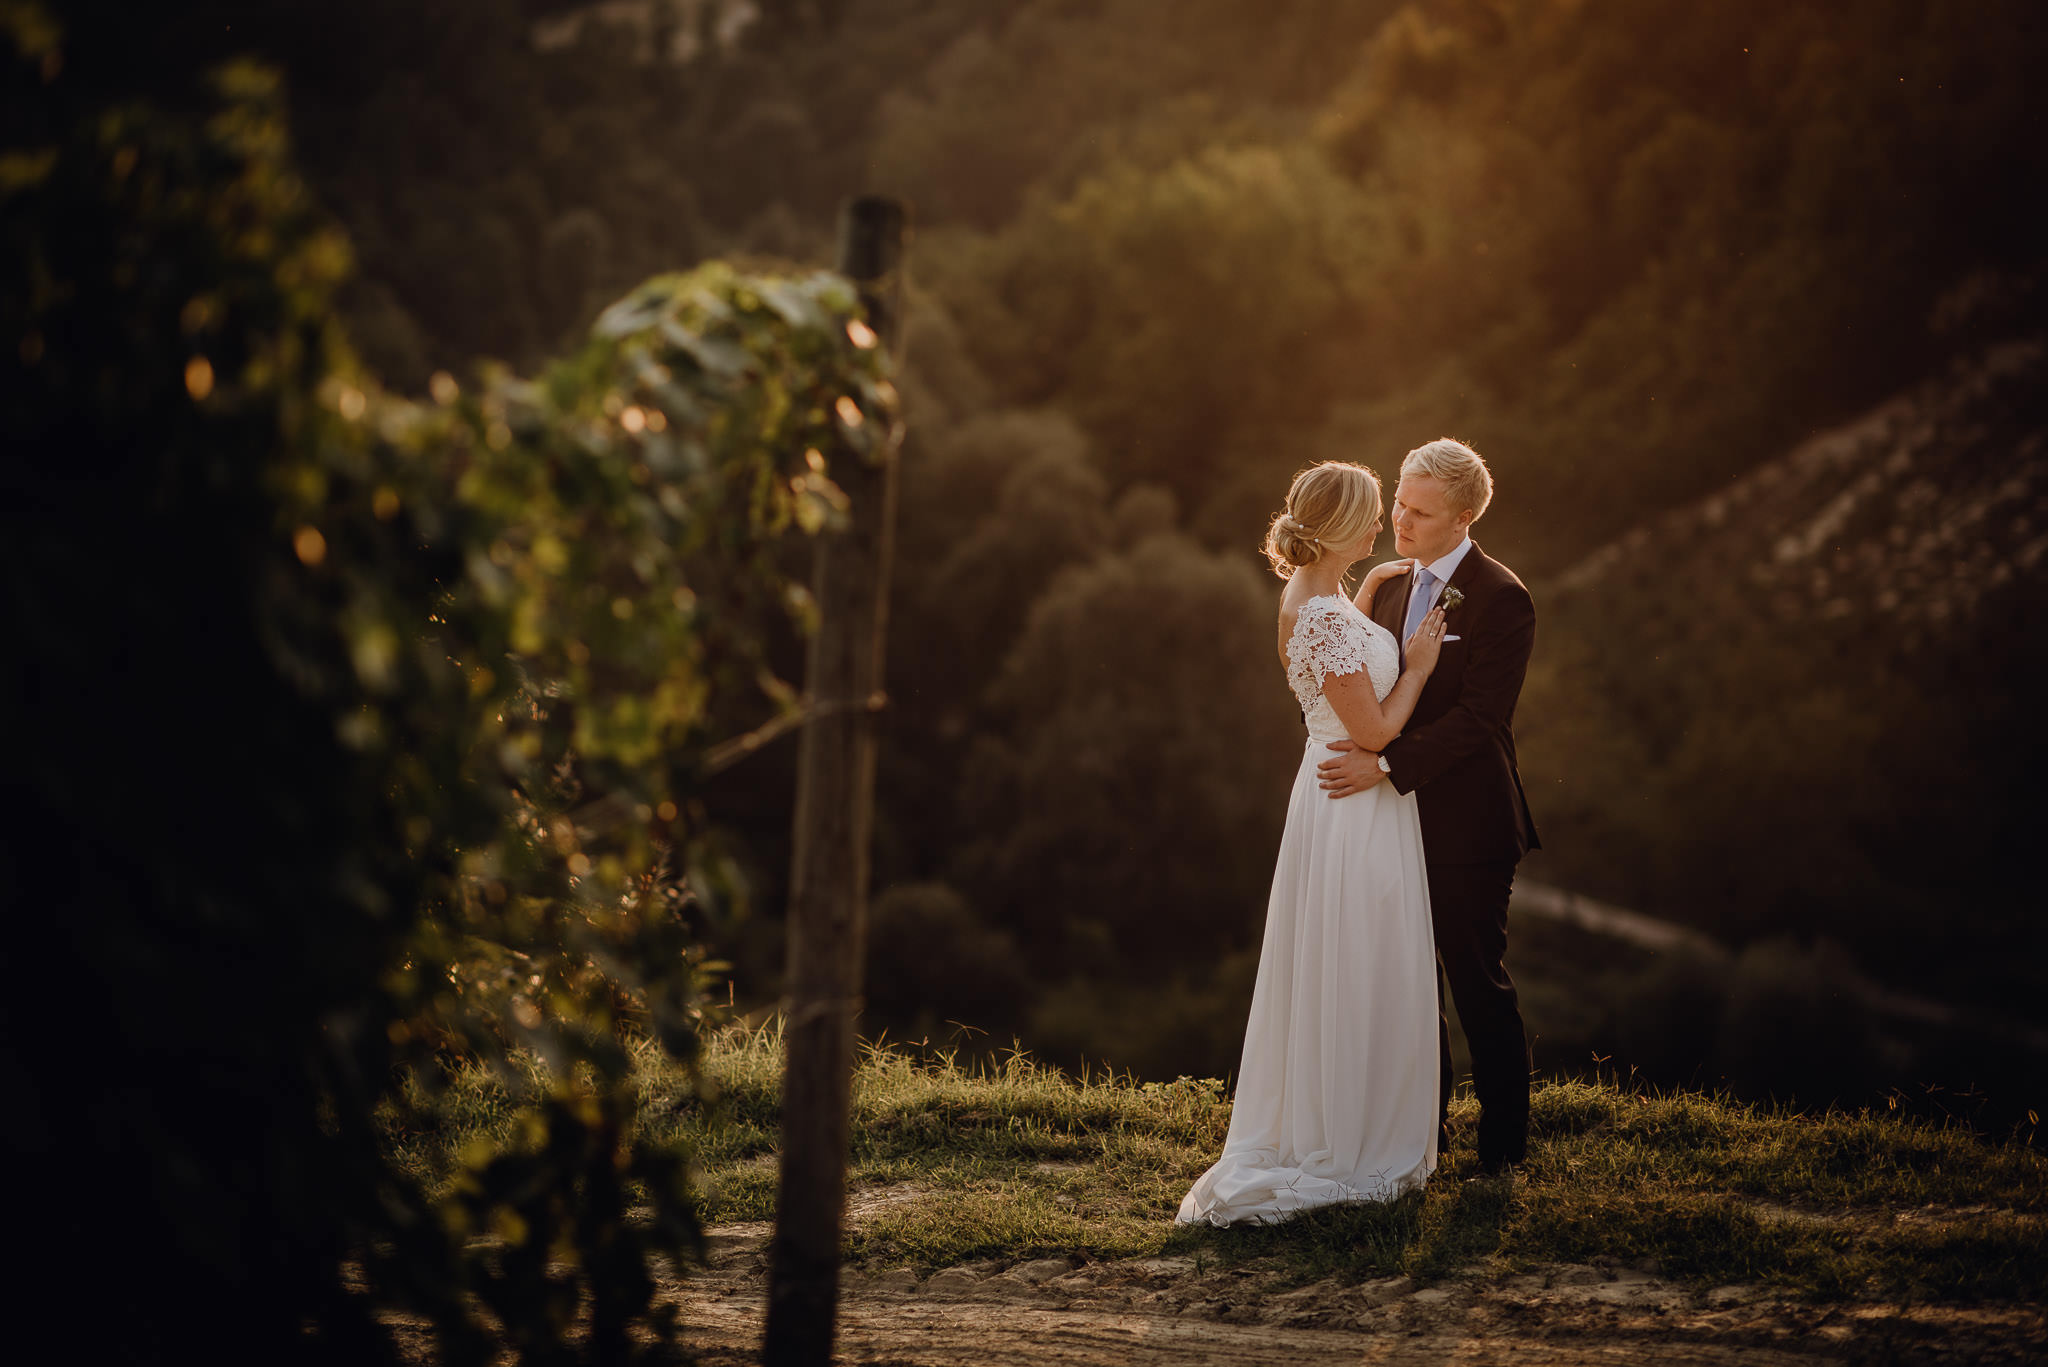 outdoor wedding in italy in a vineyard